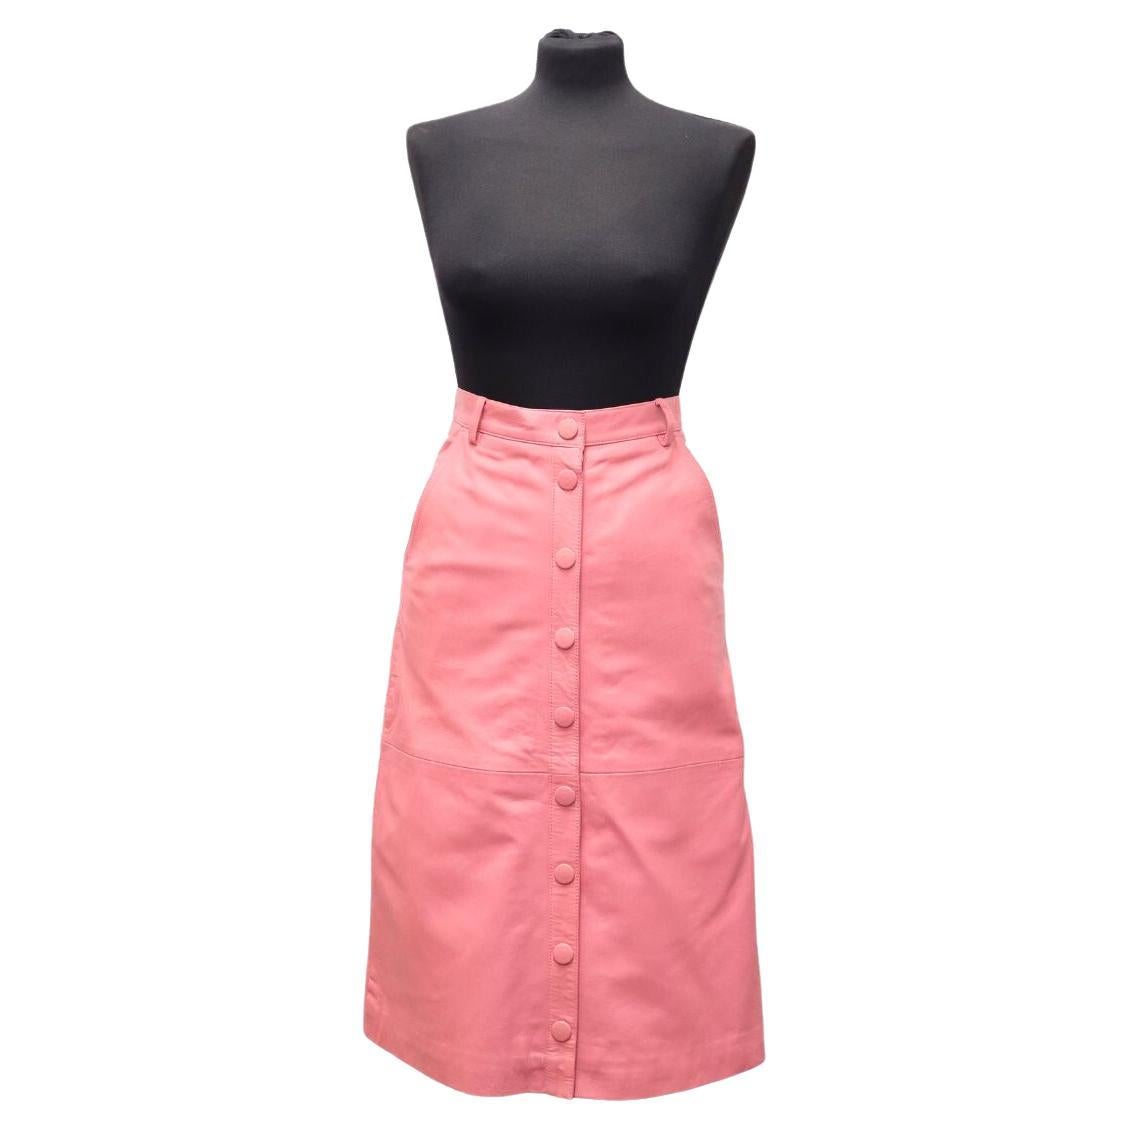 Remain Birger Christensen Bellis Leather A-Line Skirt Size EU 34 For Sale